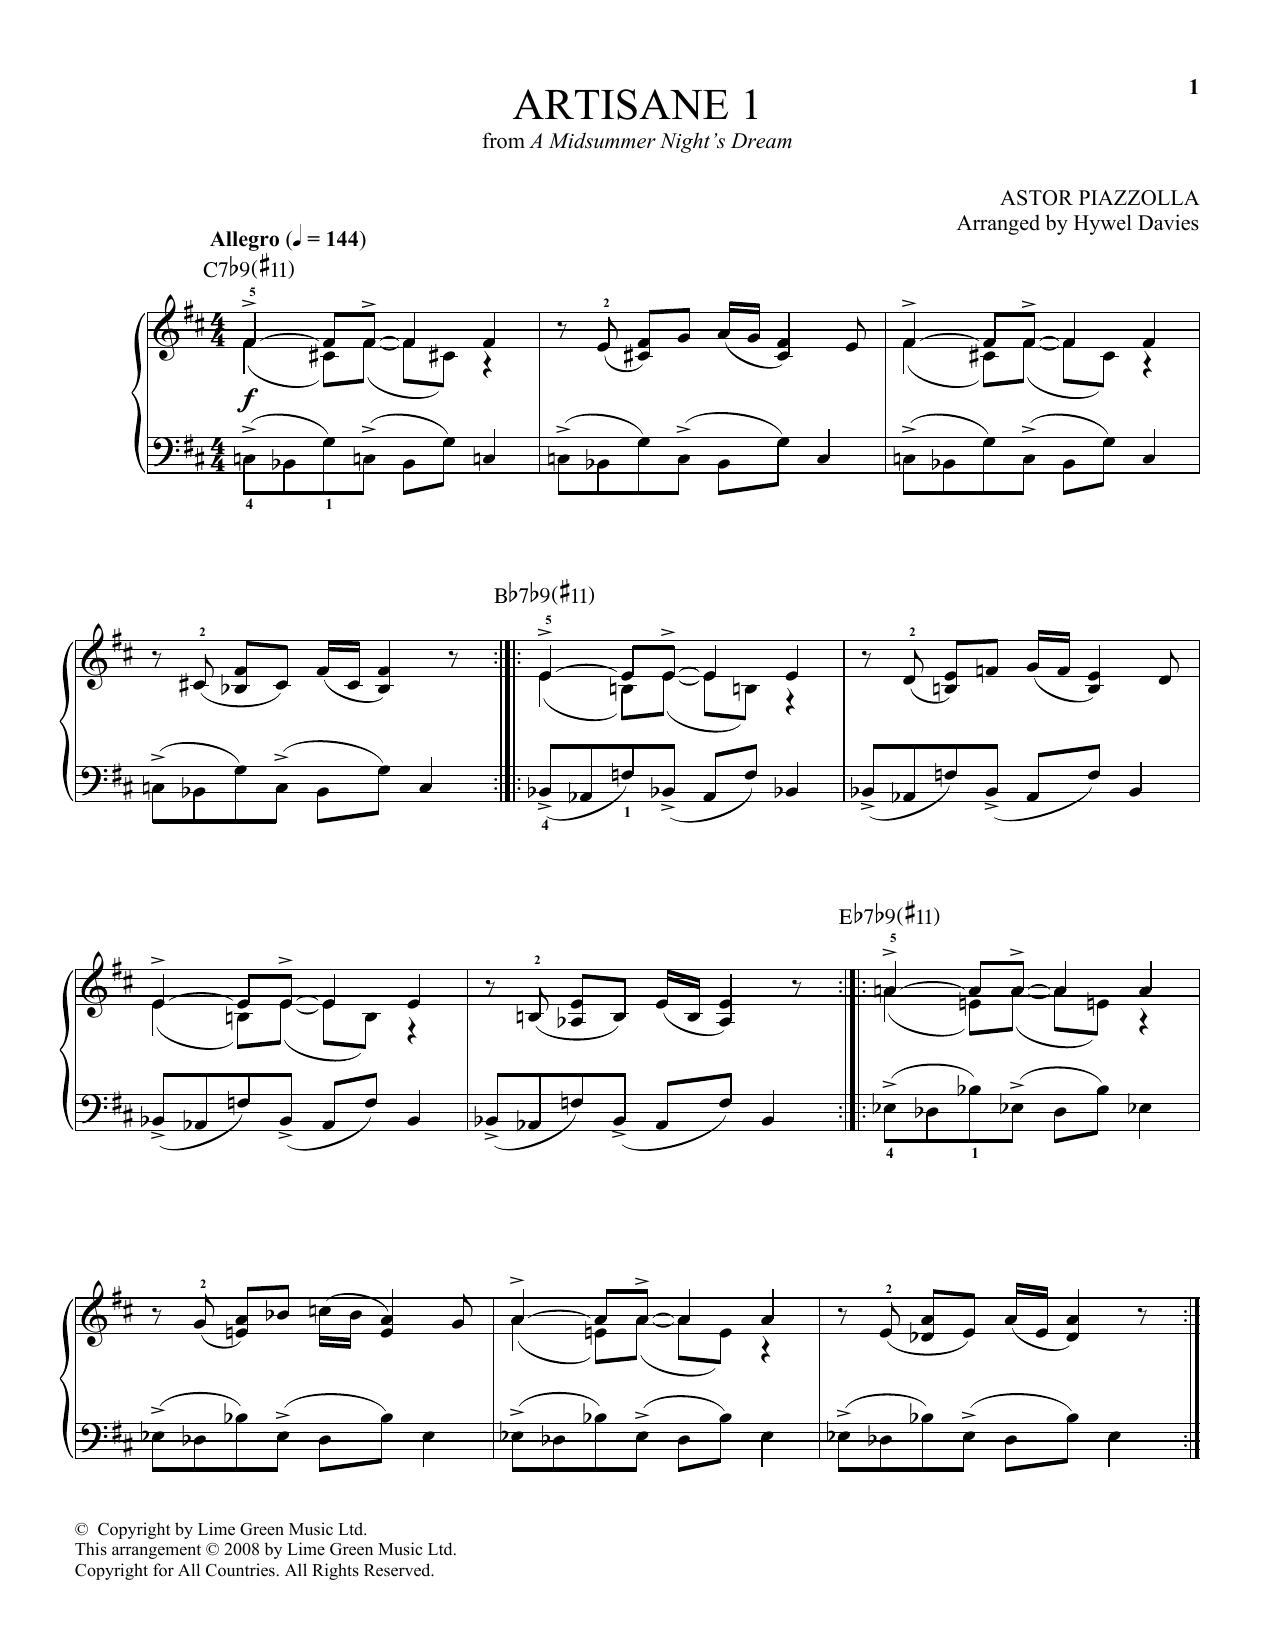 Astor Piazzolla Artisane 1 sheet music notes and chords. Download Printable PDF.